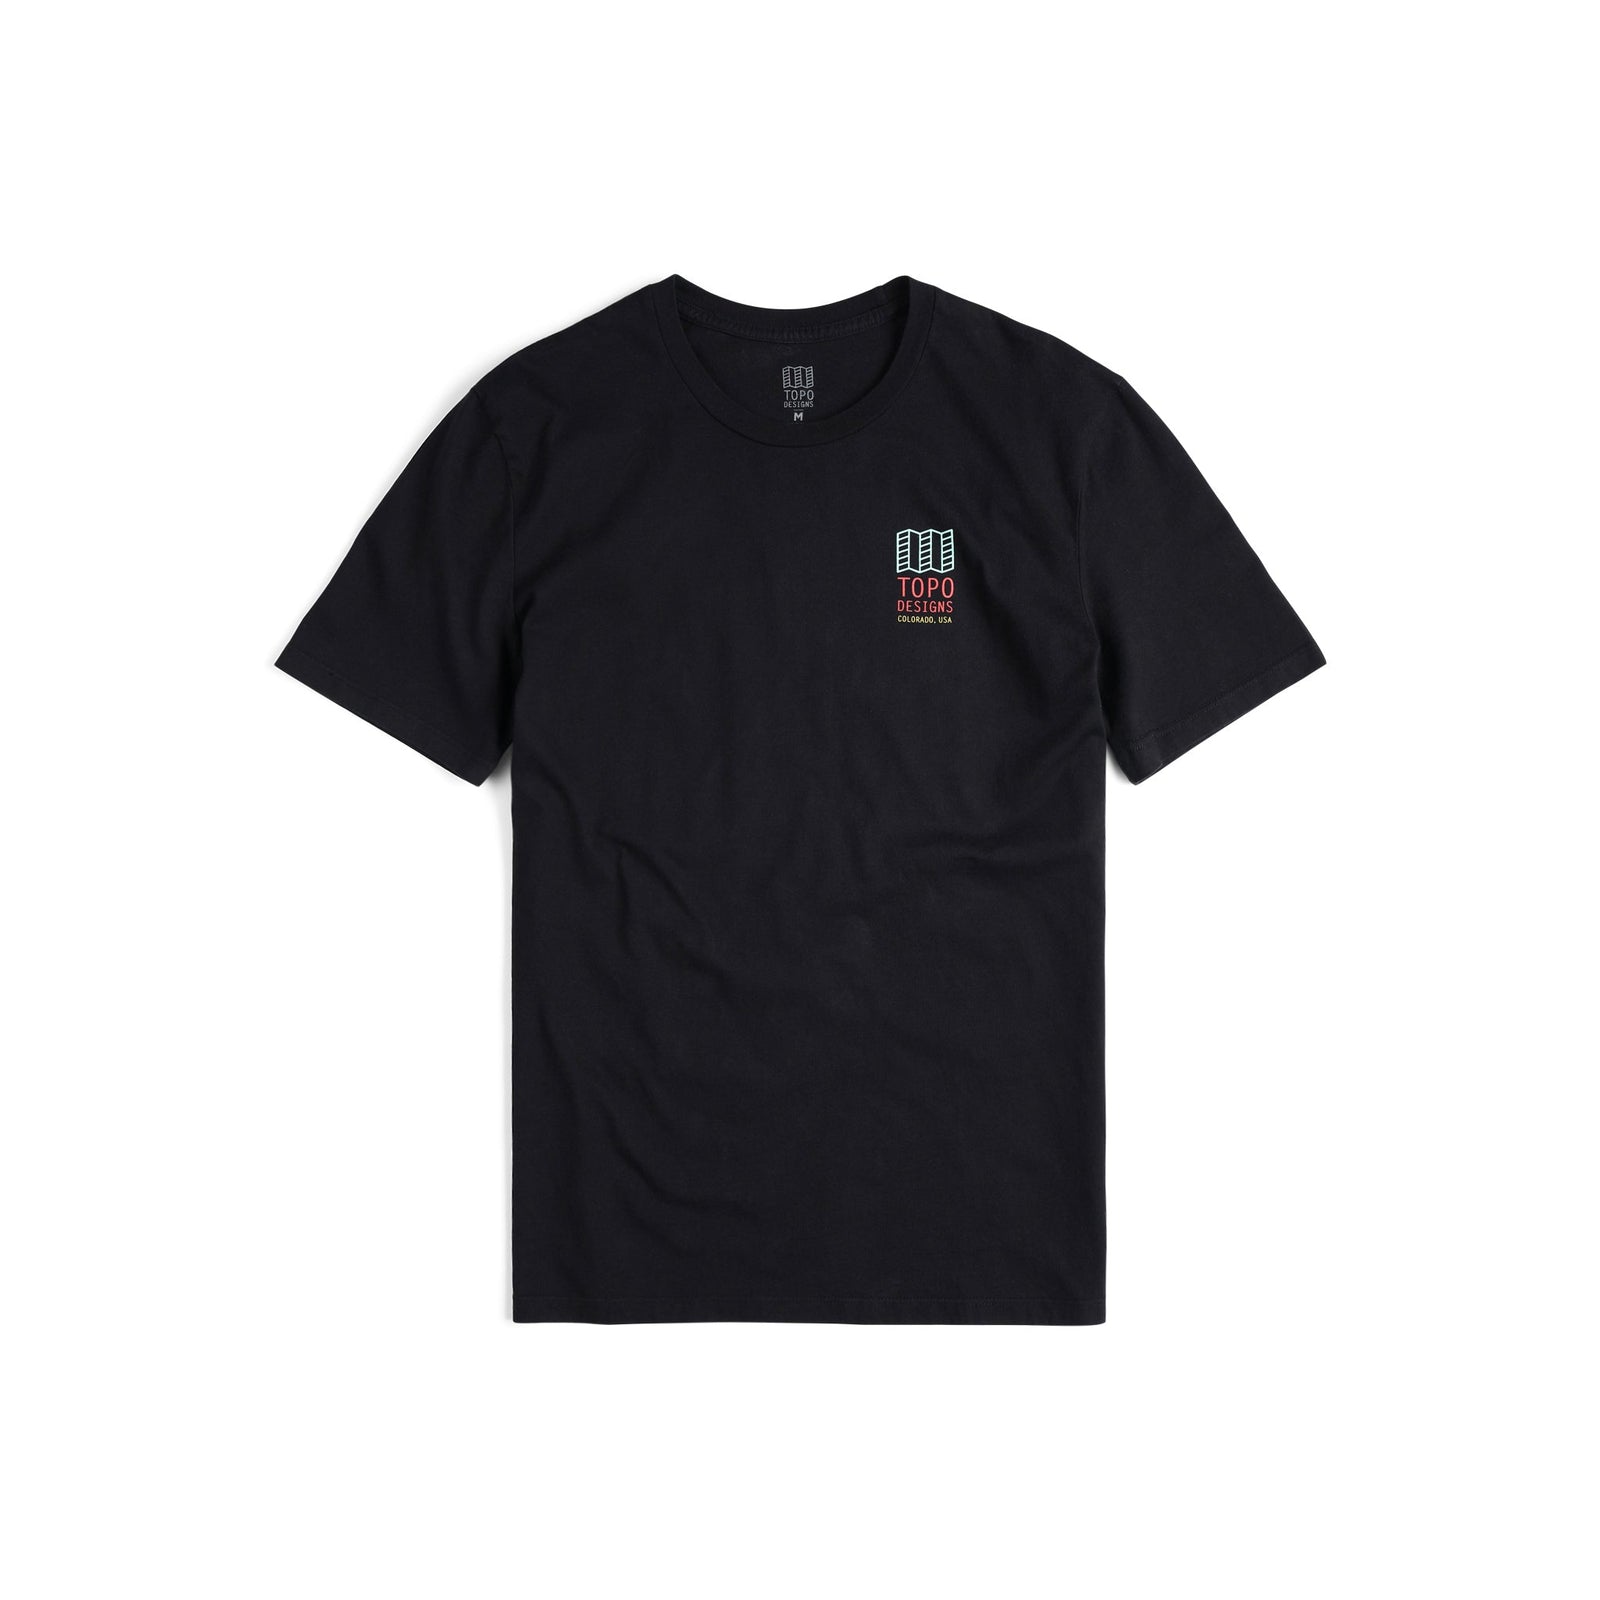 Front View of Topo Designs Men's Small Original Logo Tee 100% organic cotton short sleeve graphic logo t-shirt in "black".